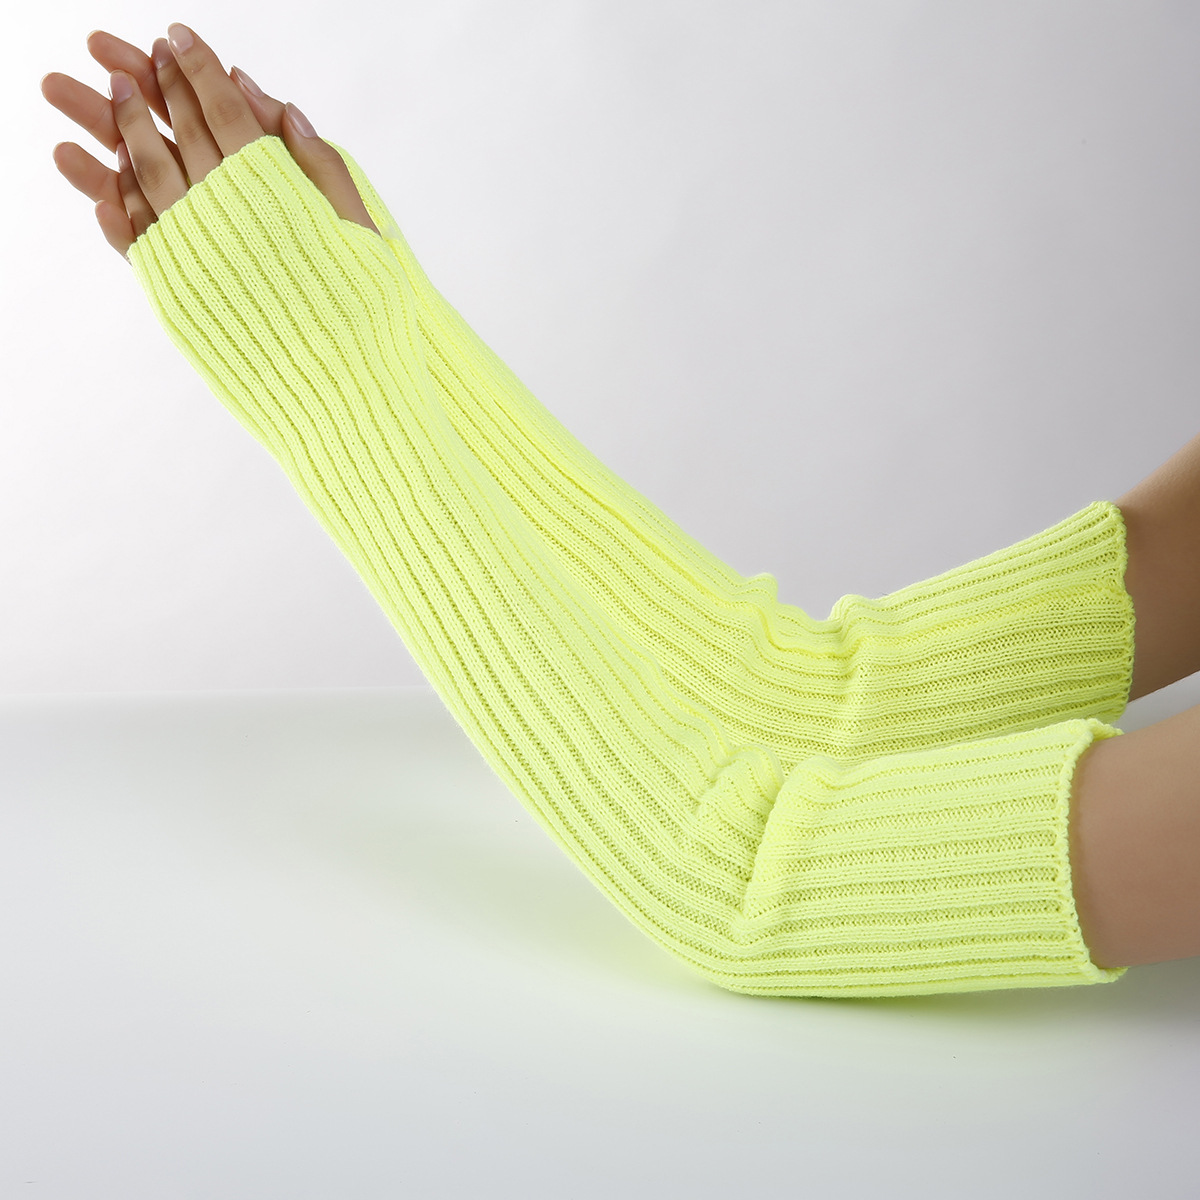 2021 Winter Warm Solid Knit Fingerless Long Gloves Wool Men and Women Hand Crochet Thumbhole Arm Warmers Mittens